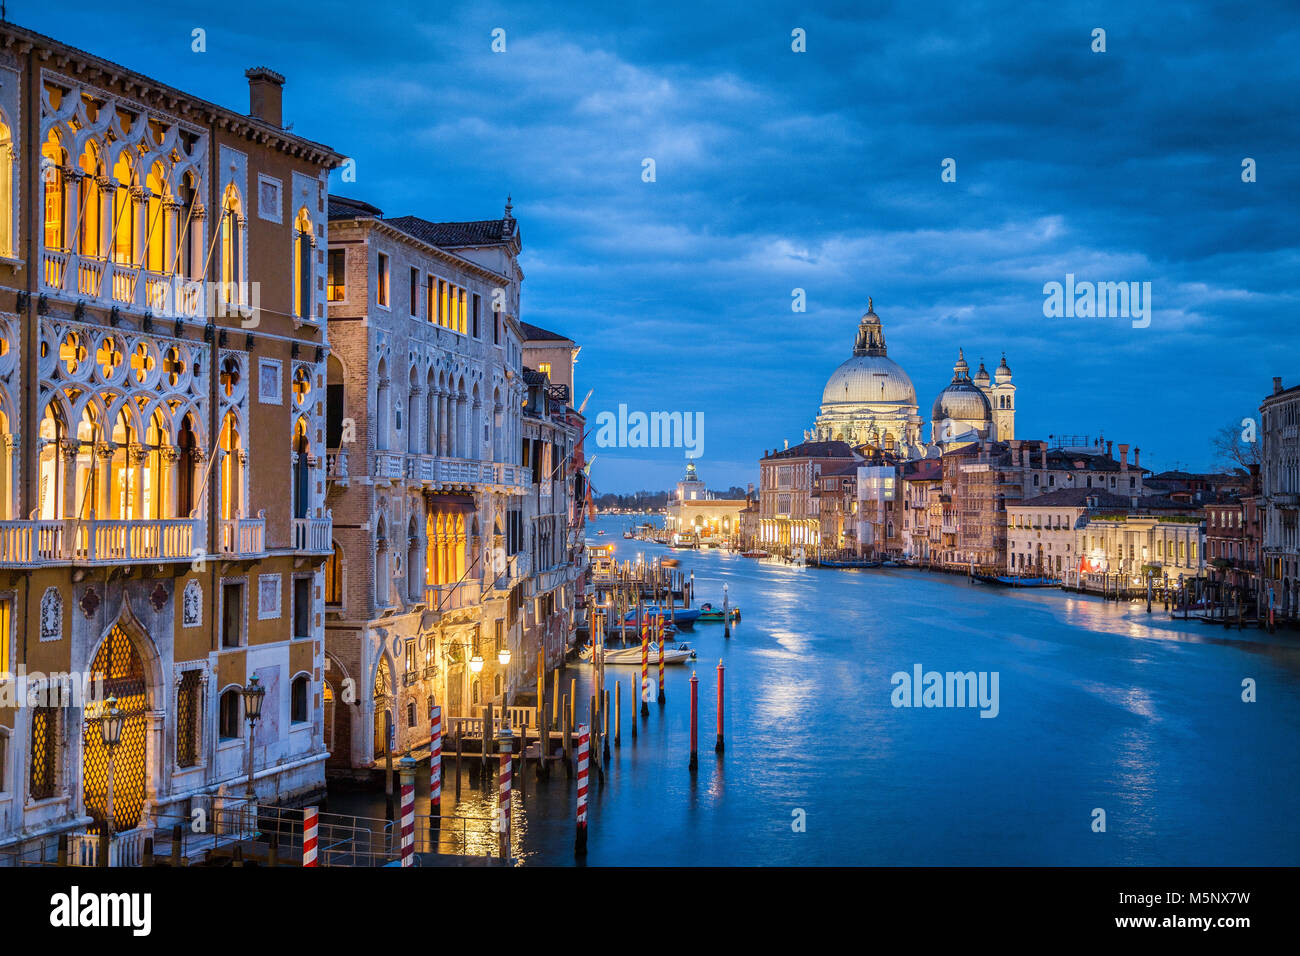 Vista clásica del famoso Canal Grande con la histórica Basílica di Santa Maria della Salute, en el fondo en penumbra, Venecia, Italia Foto de stock